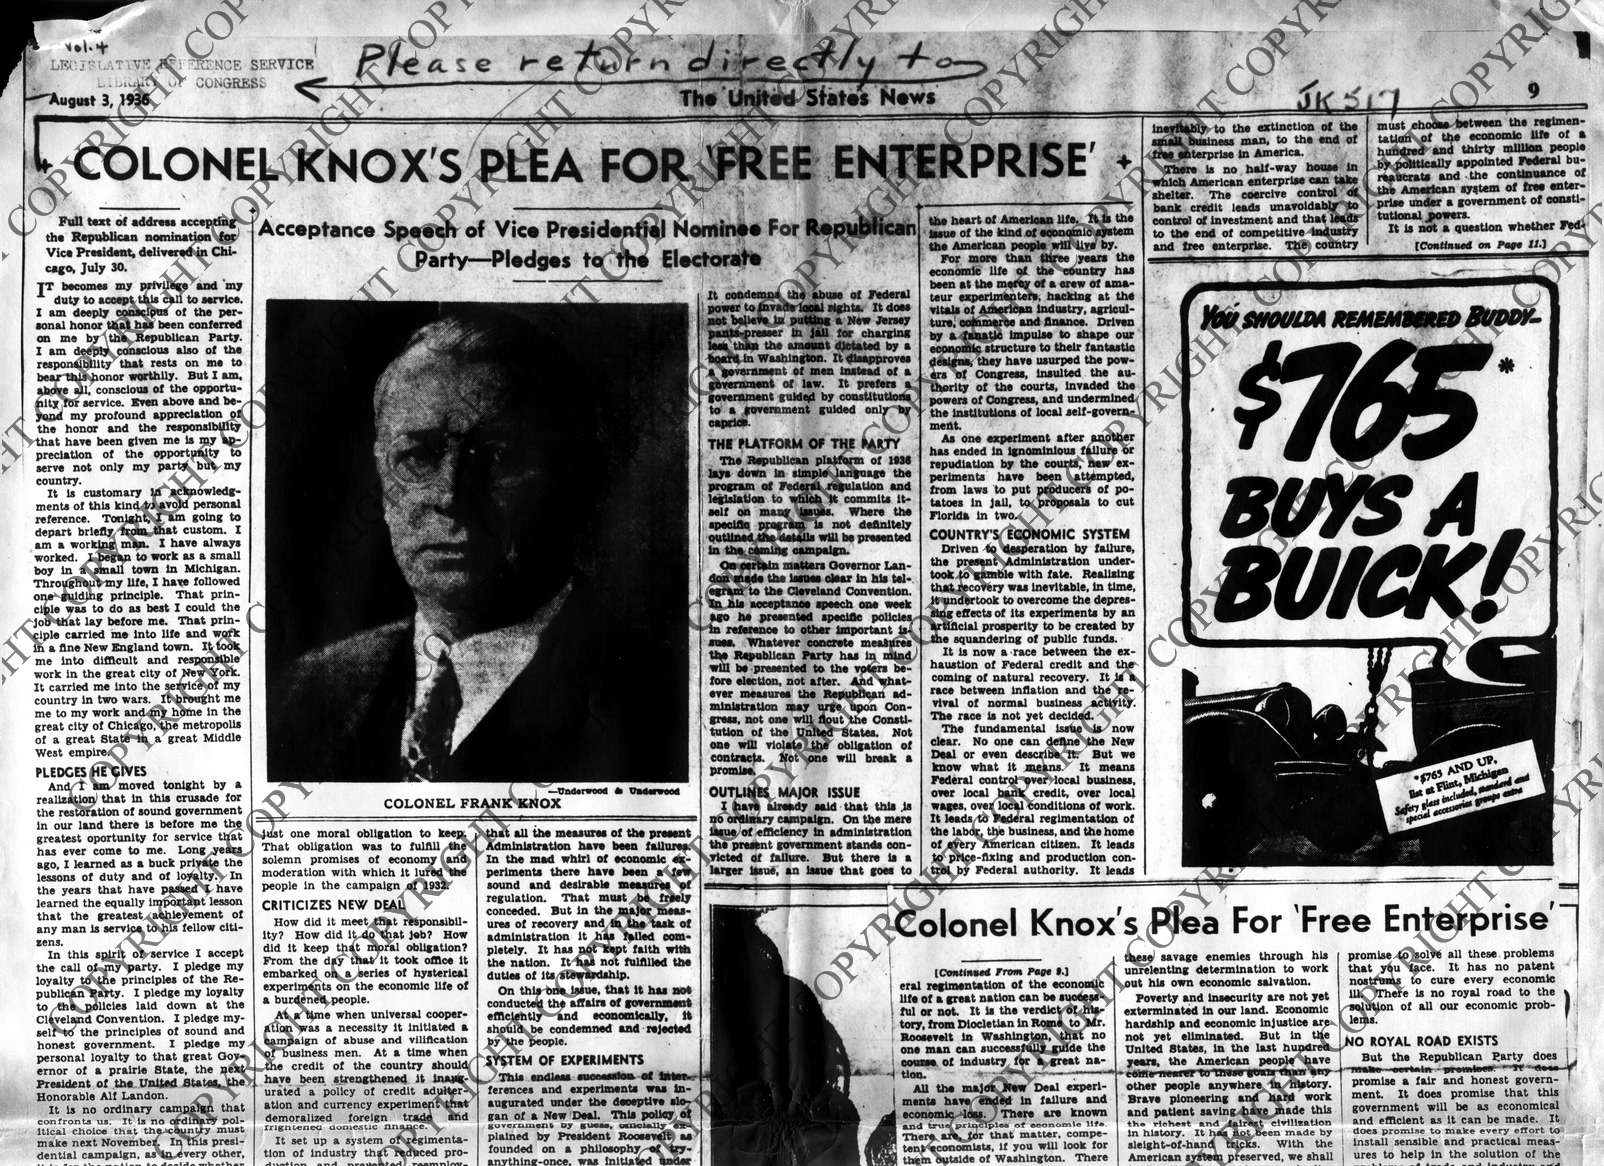 Newspaper Article, "Colonel Knox's Plea for 'Free Enterprise'"